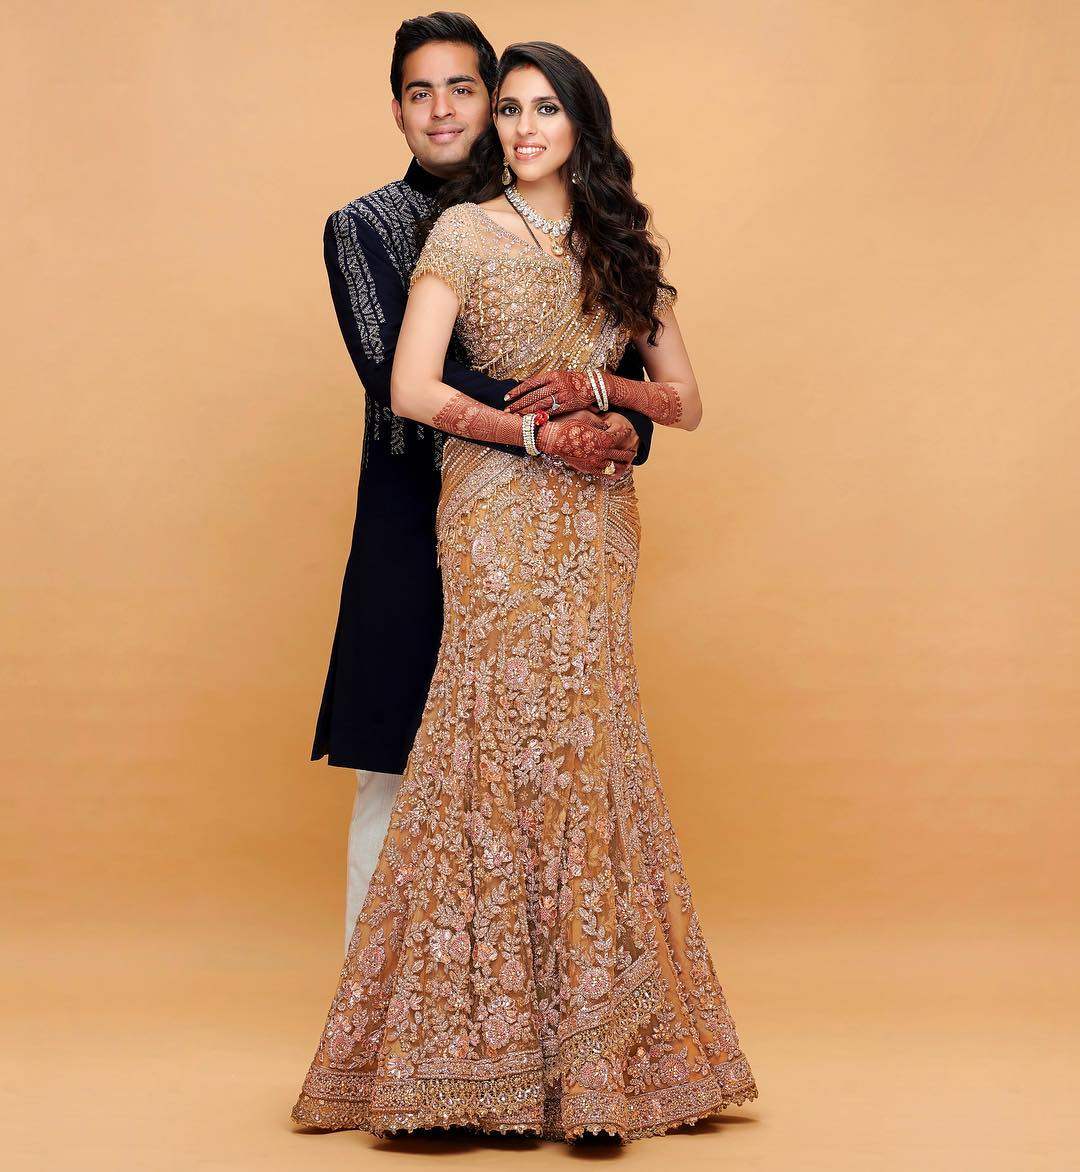 Diamond heiress Shloka Mehta married billionaire Akash Ambani ... so what’s their lifestyle together like? Photo: @dabbooratnani/Instagram